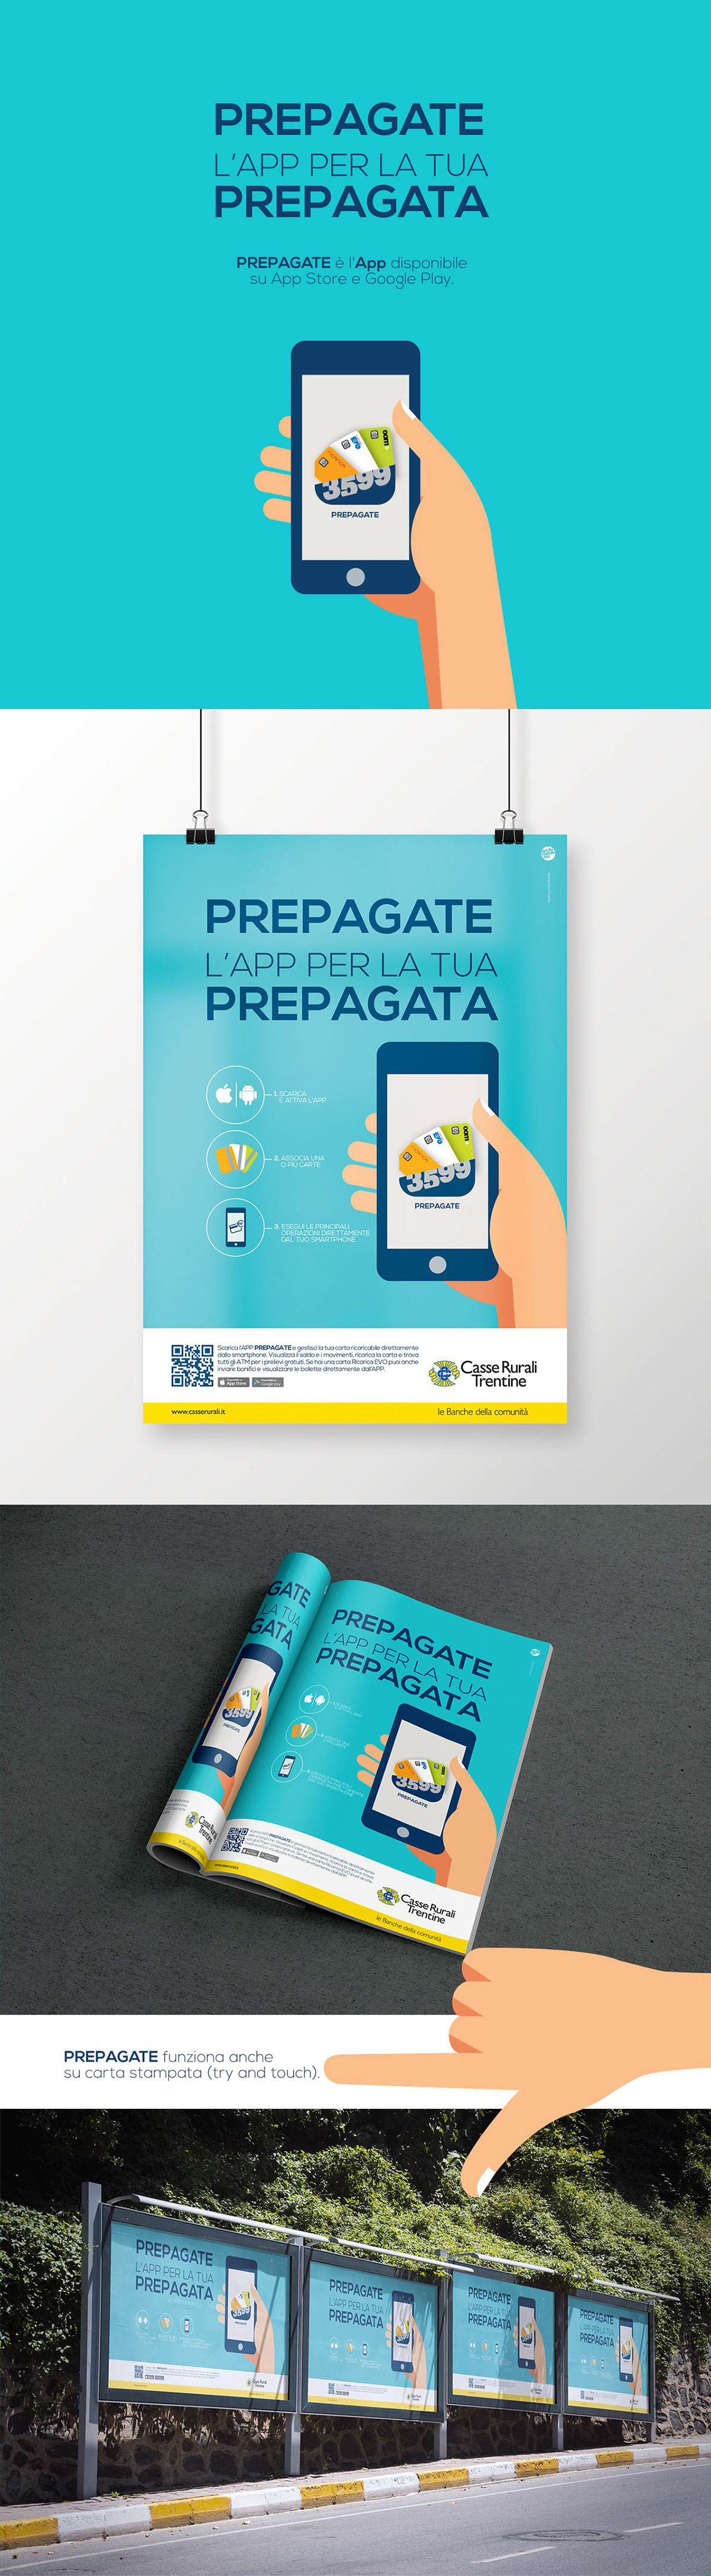 Prepagate app archimede creativa  Casse Rurali Trentine app mobile prepay card bank app 